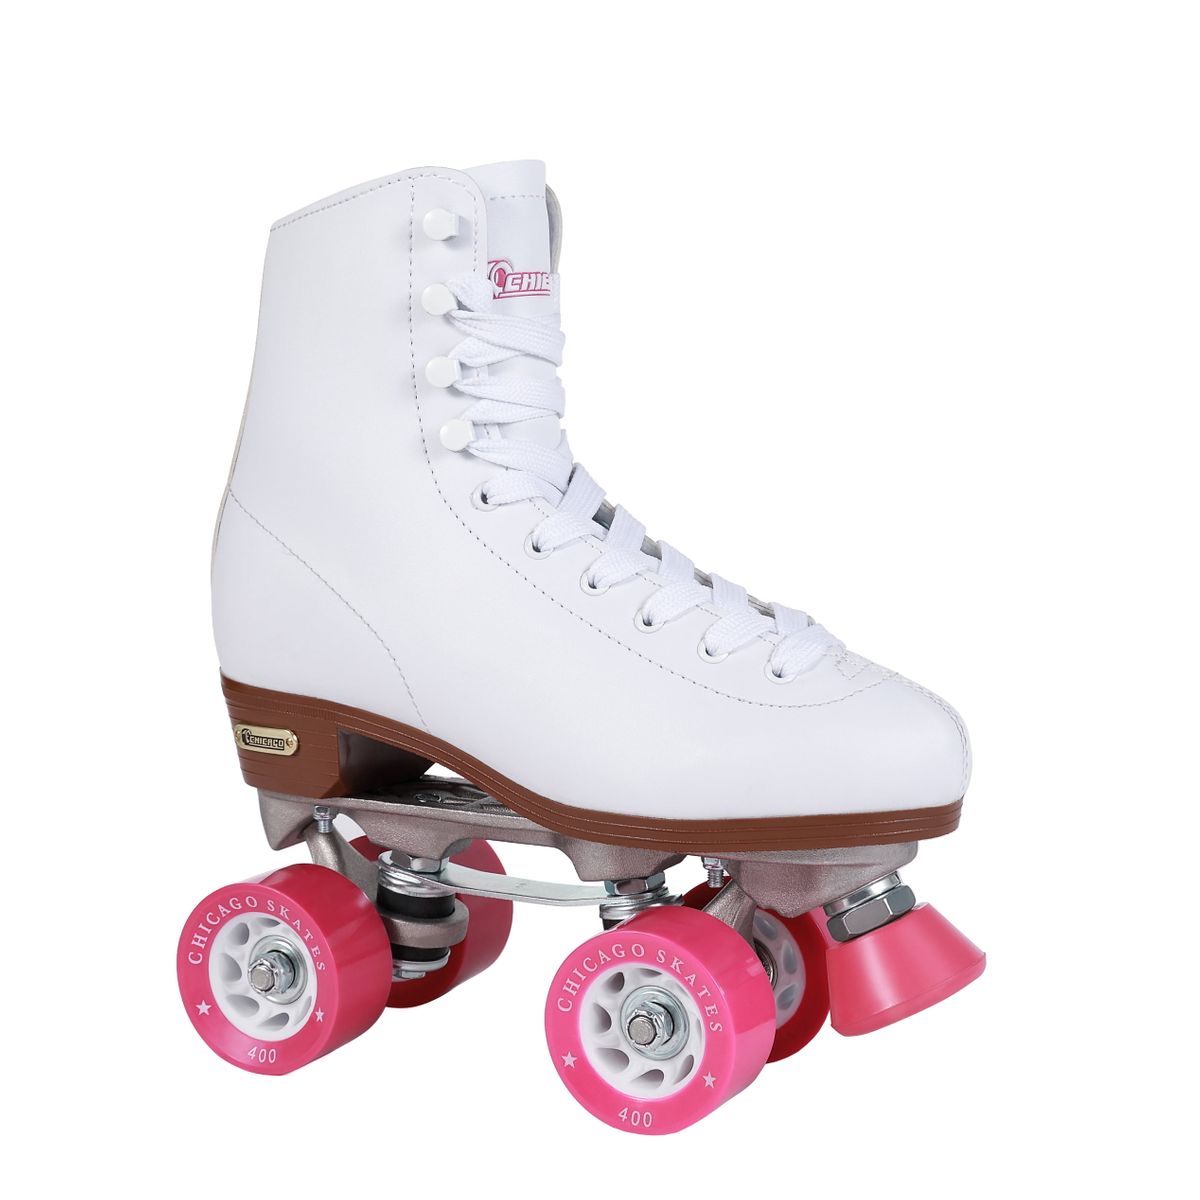 5％OFF 割引発見 送料無料 Chicago Skates レディース クラシック クワッド ローラースケート ホワイト サイズ6 海外通販 Ladies' Classic Quad Roller White Size 6 transac.uk transac.uk